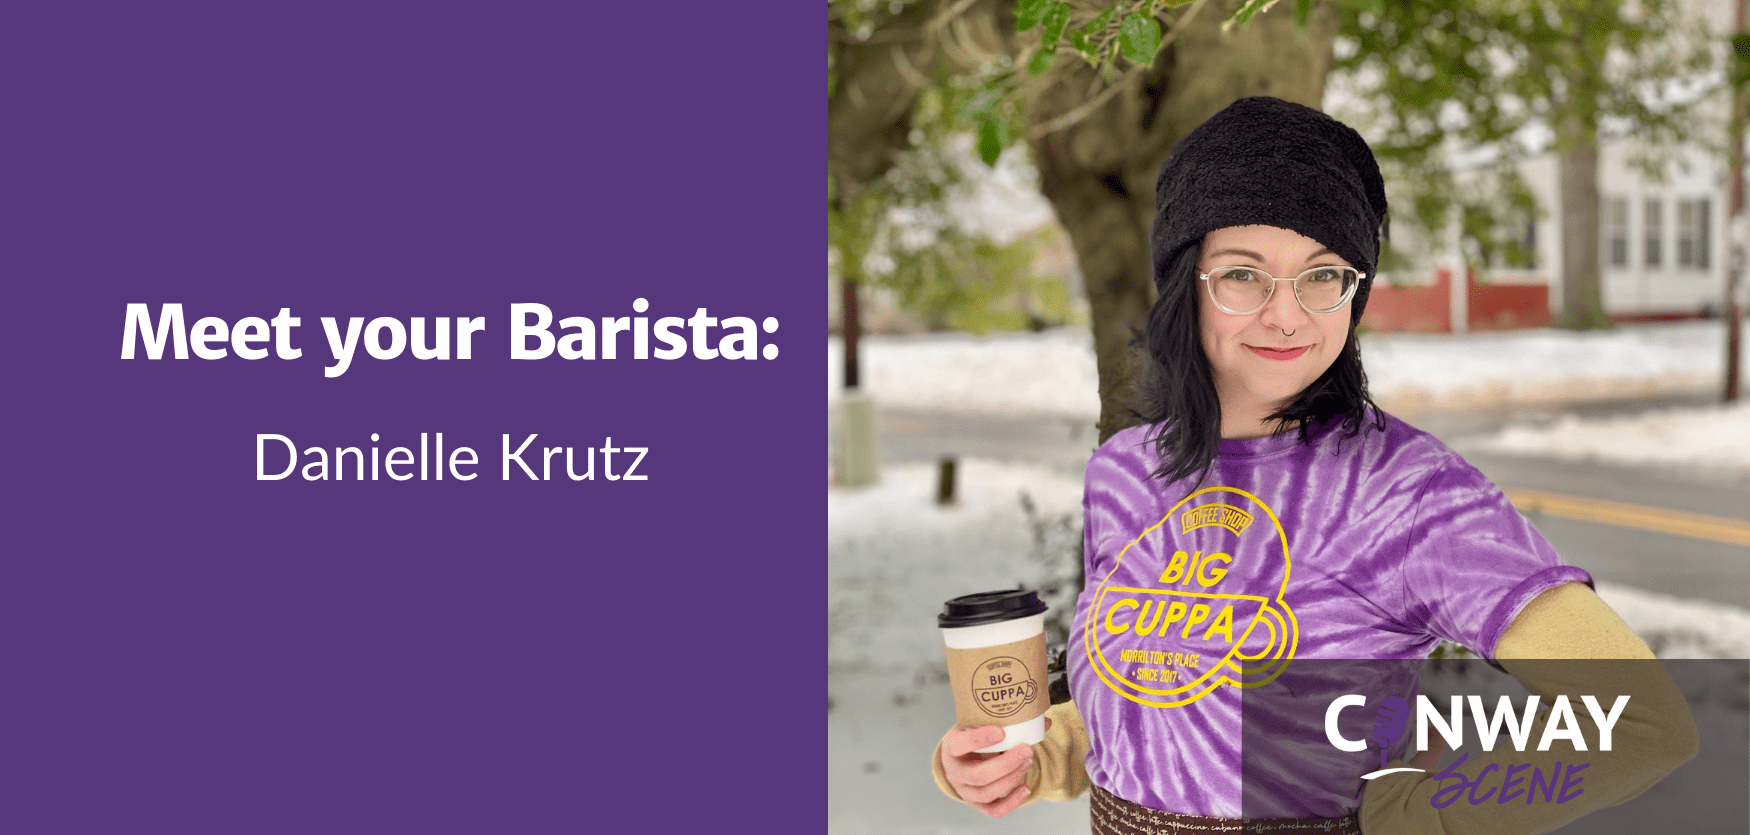 Meet your Barista Danielle Krutz